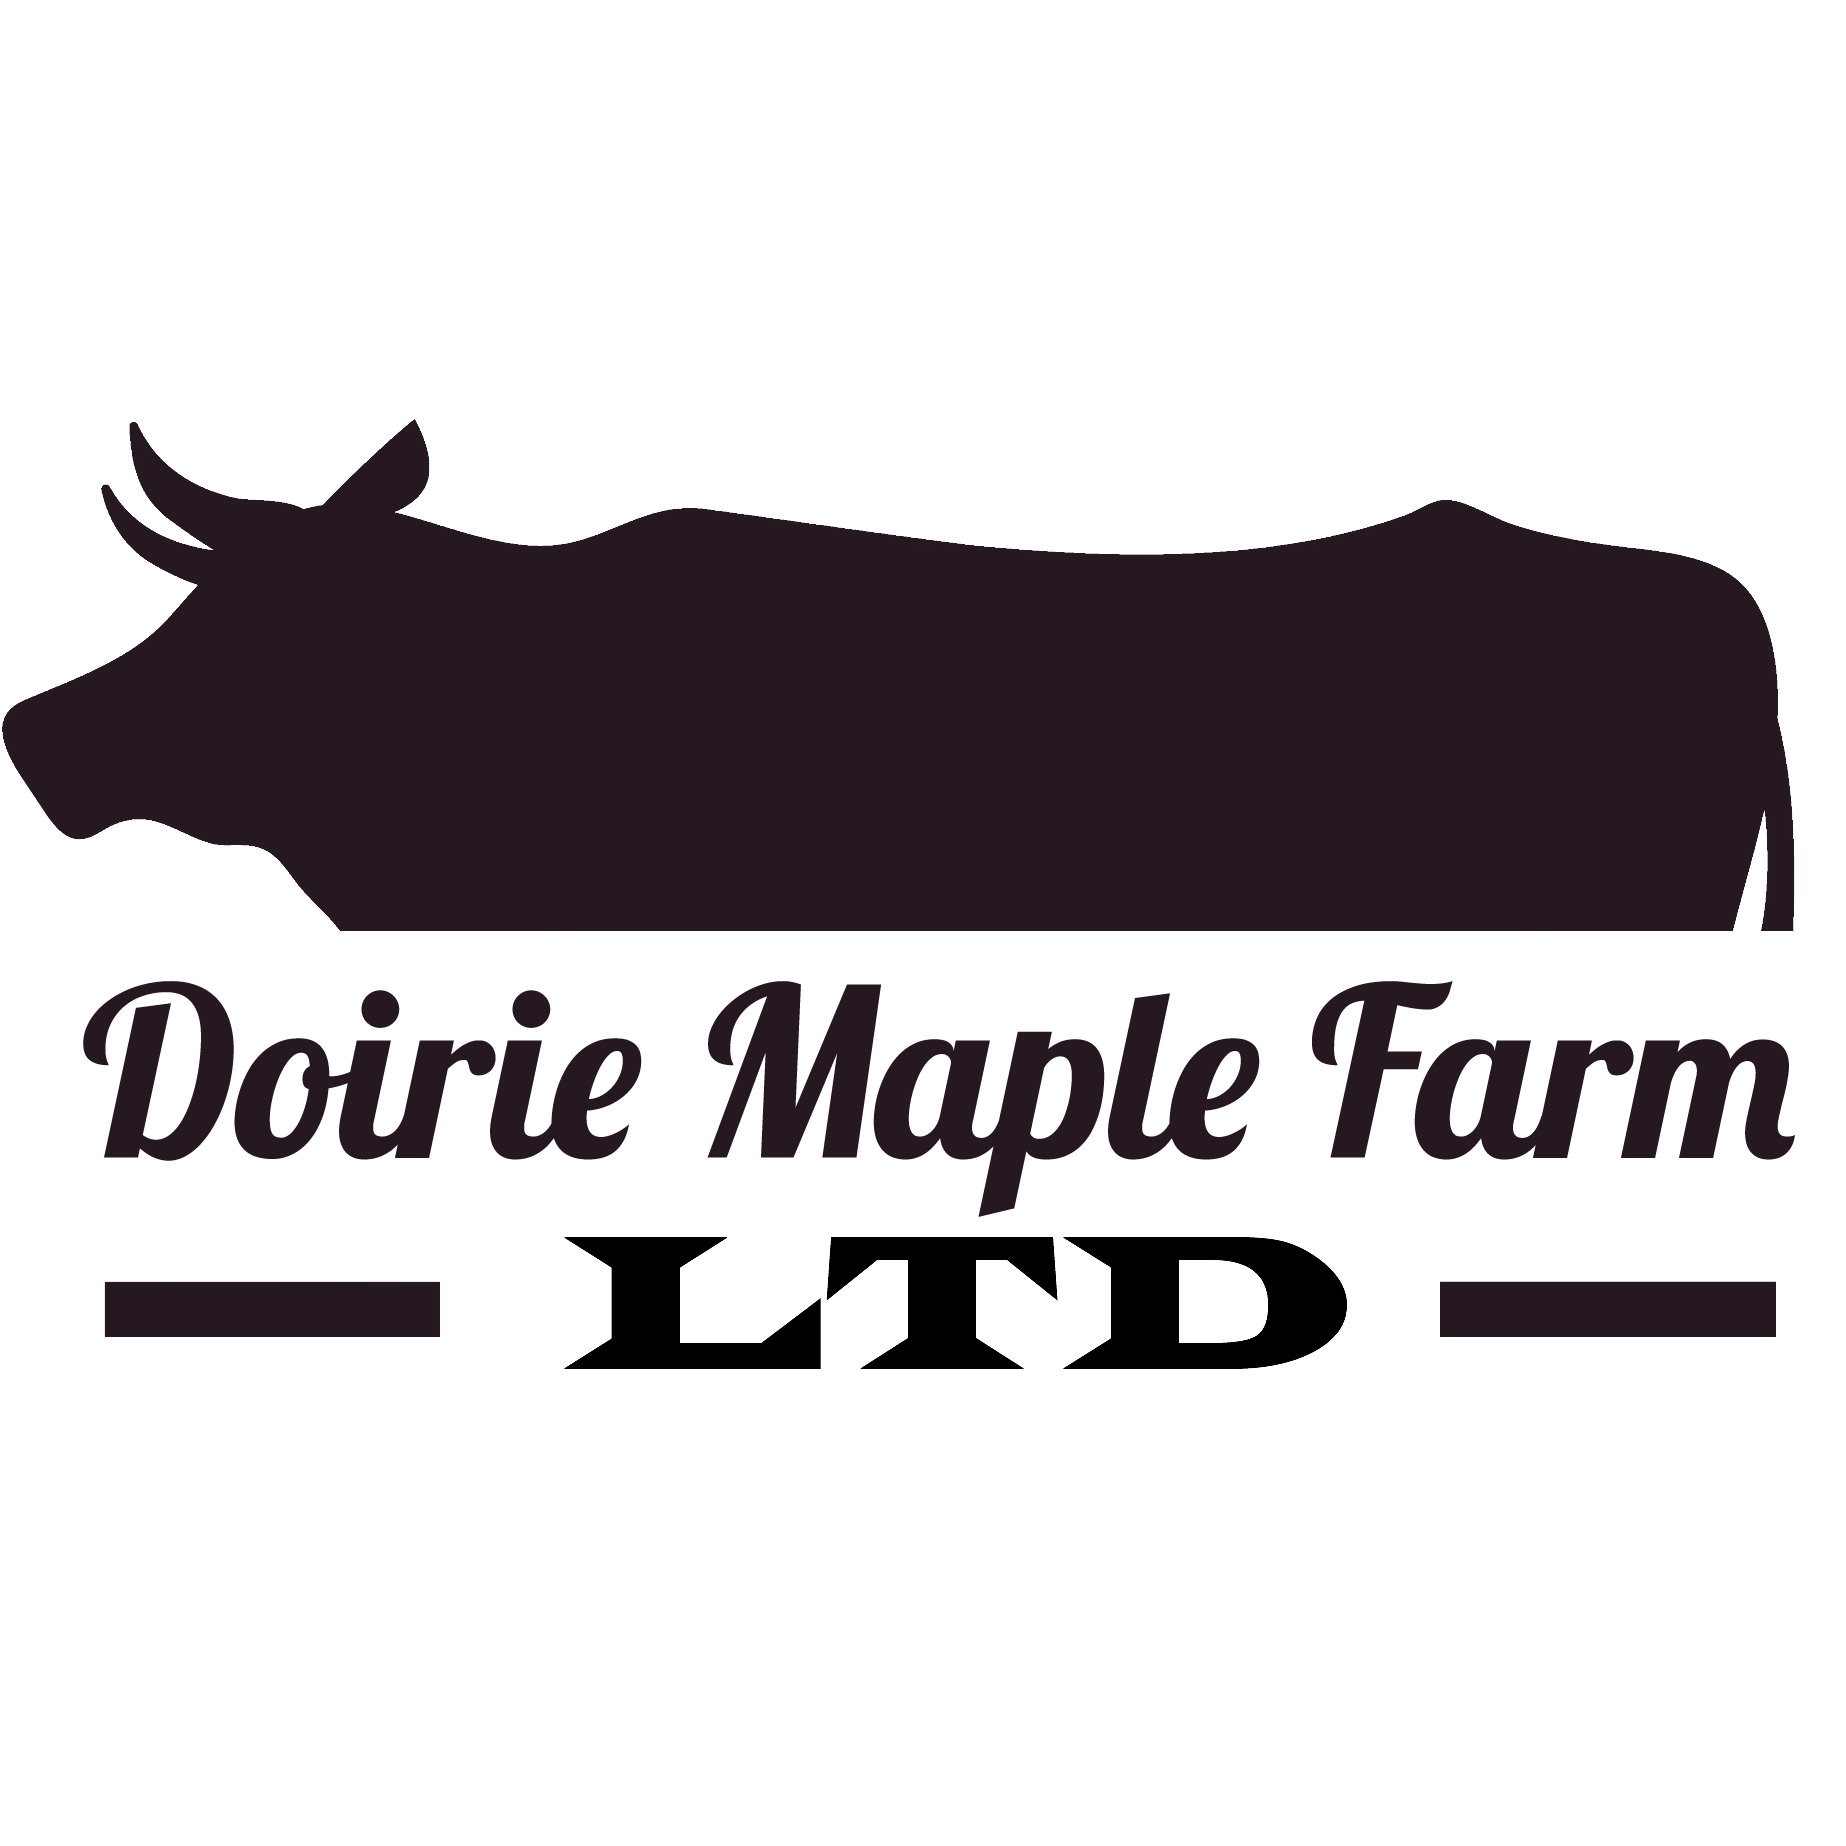 Doirie Maple Farm Ltd